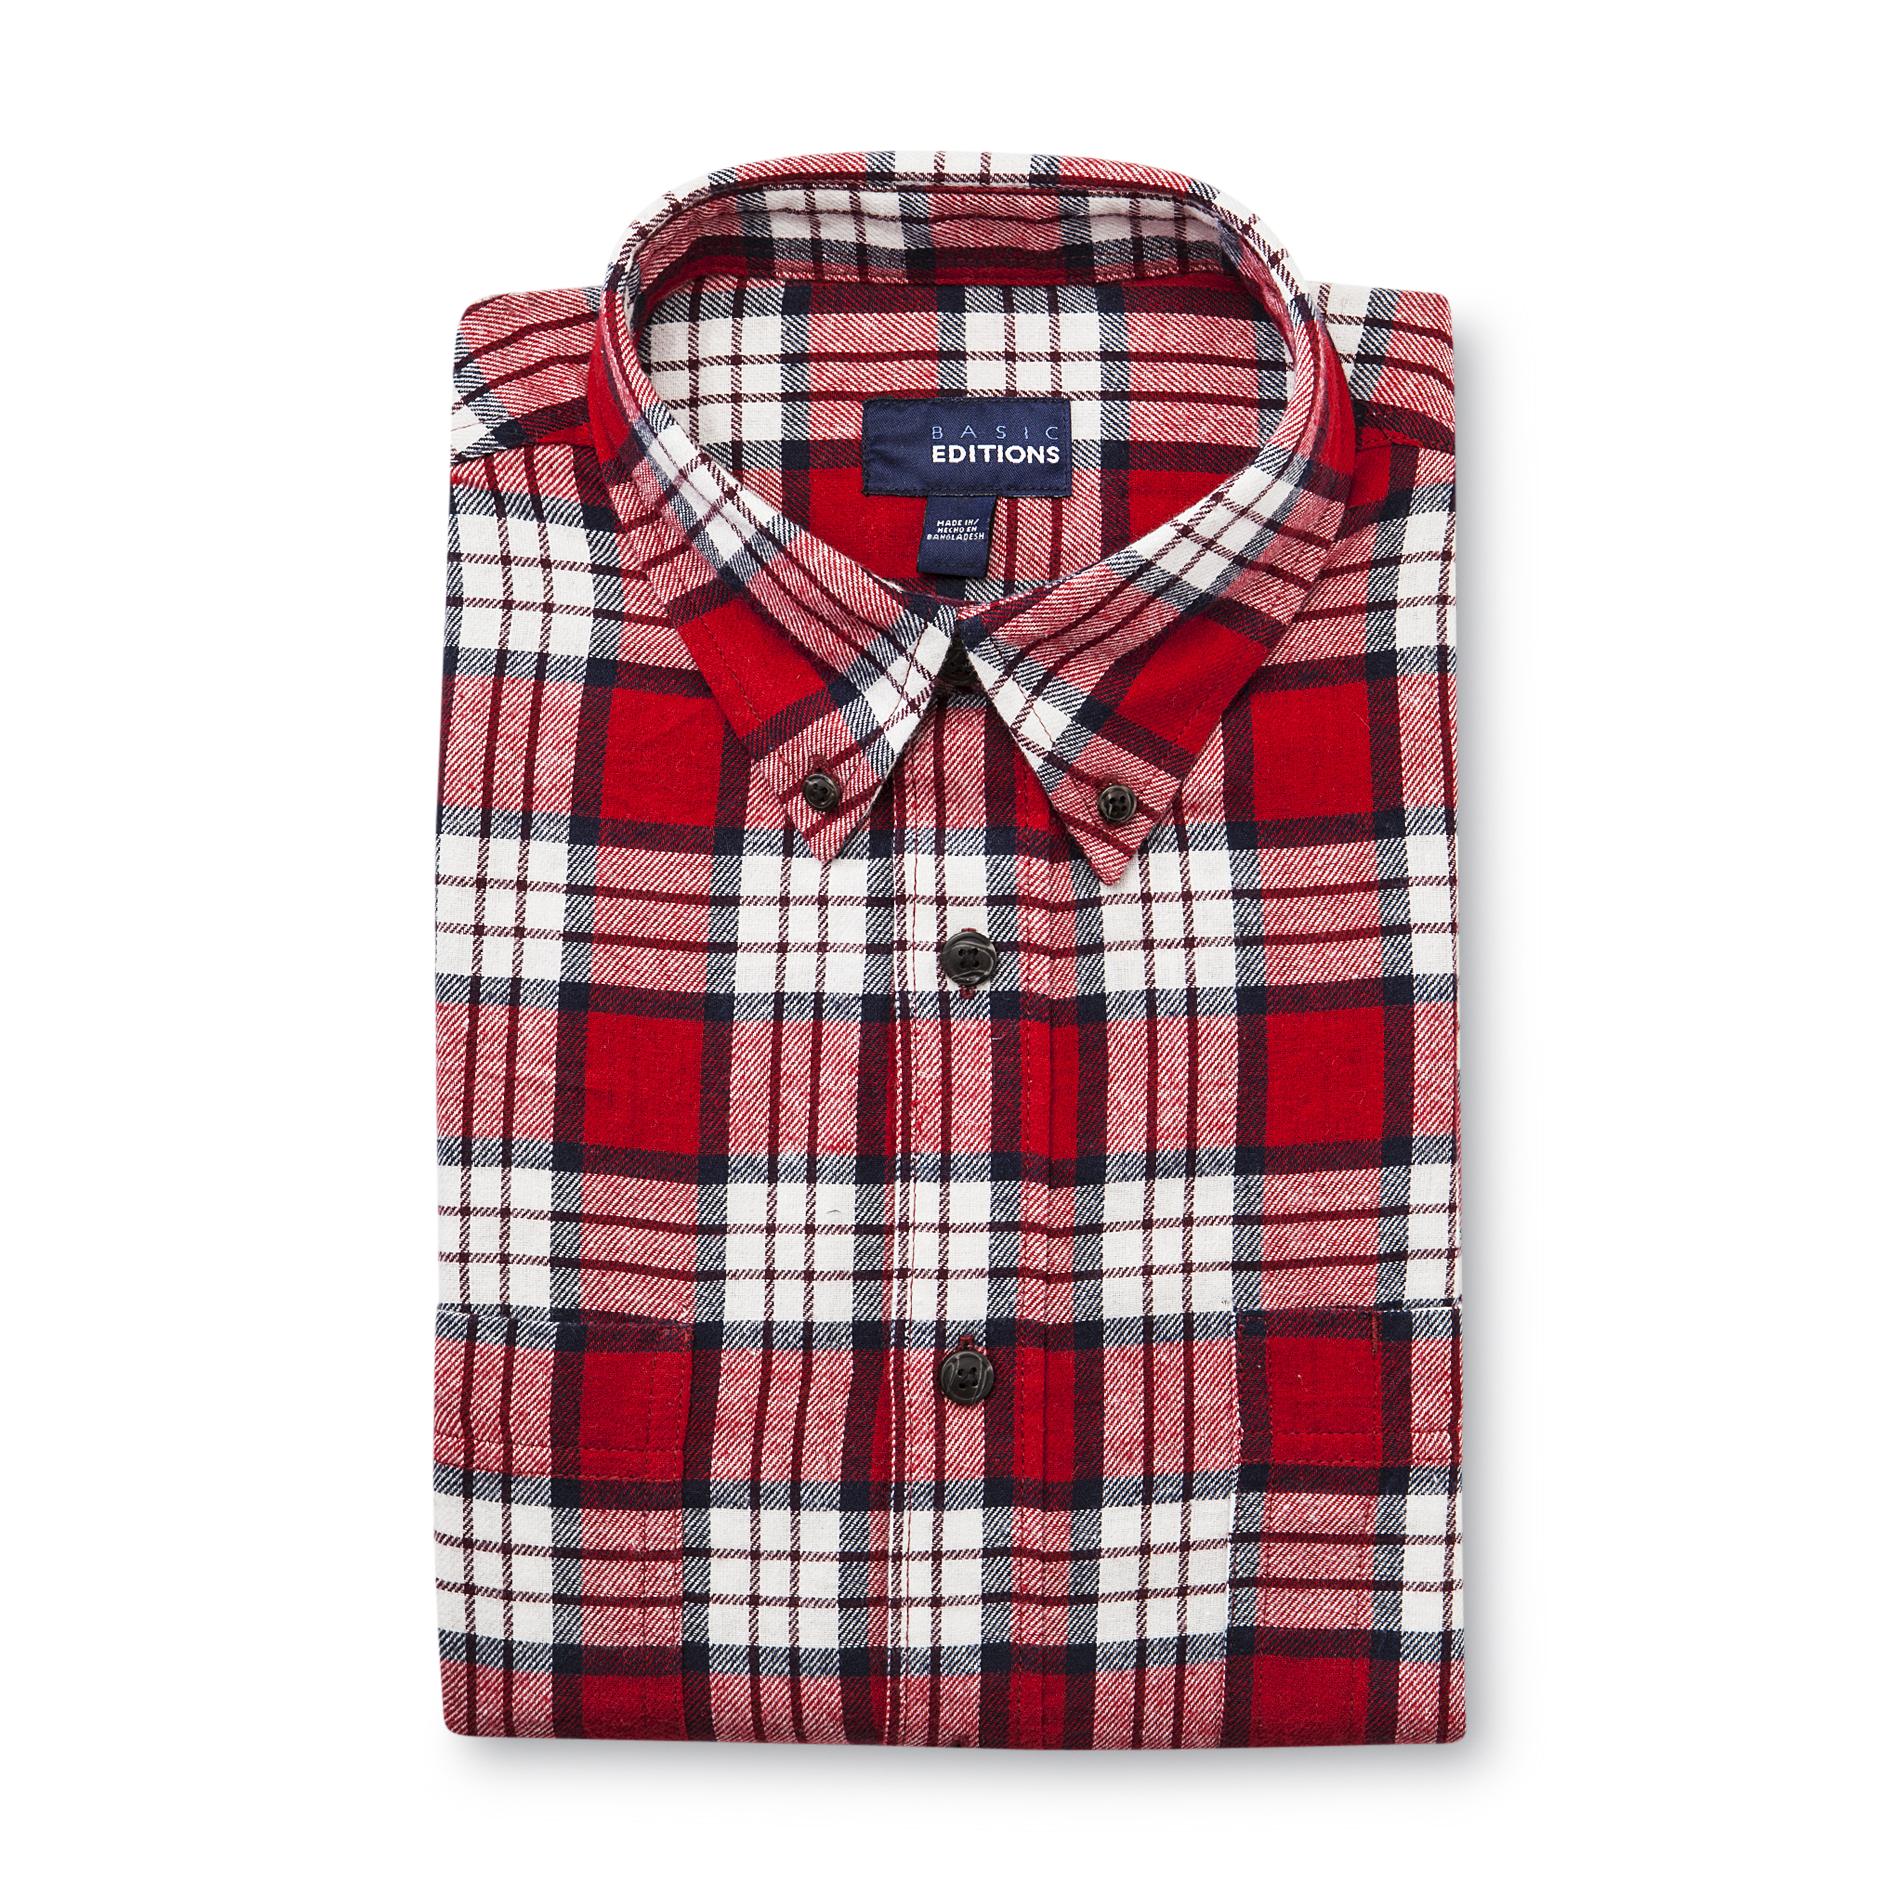 Basic Editions Men's Big & Tall Flannel Shirt - Plaid